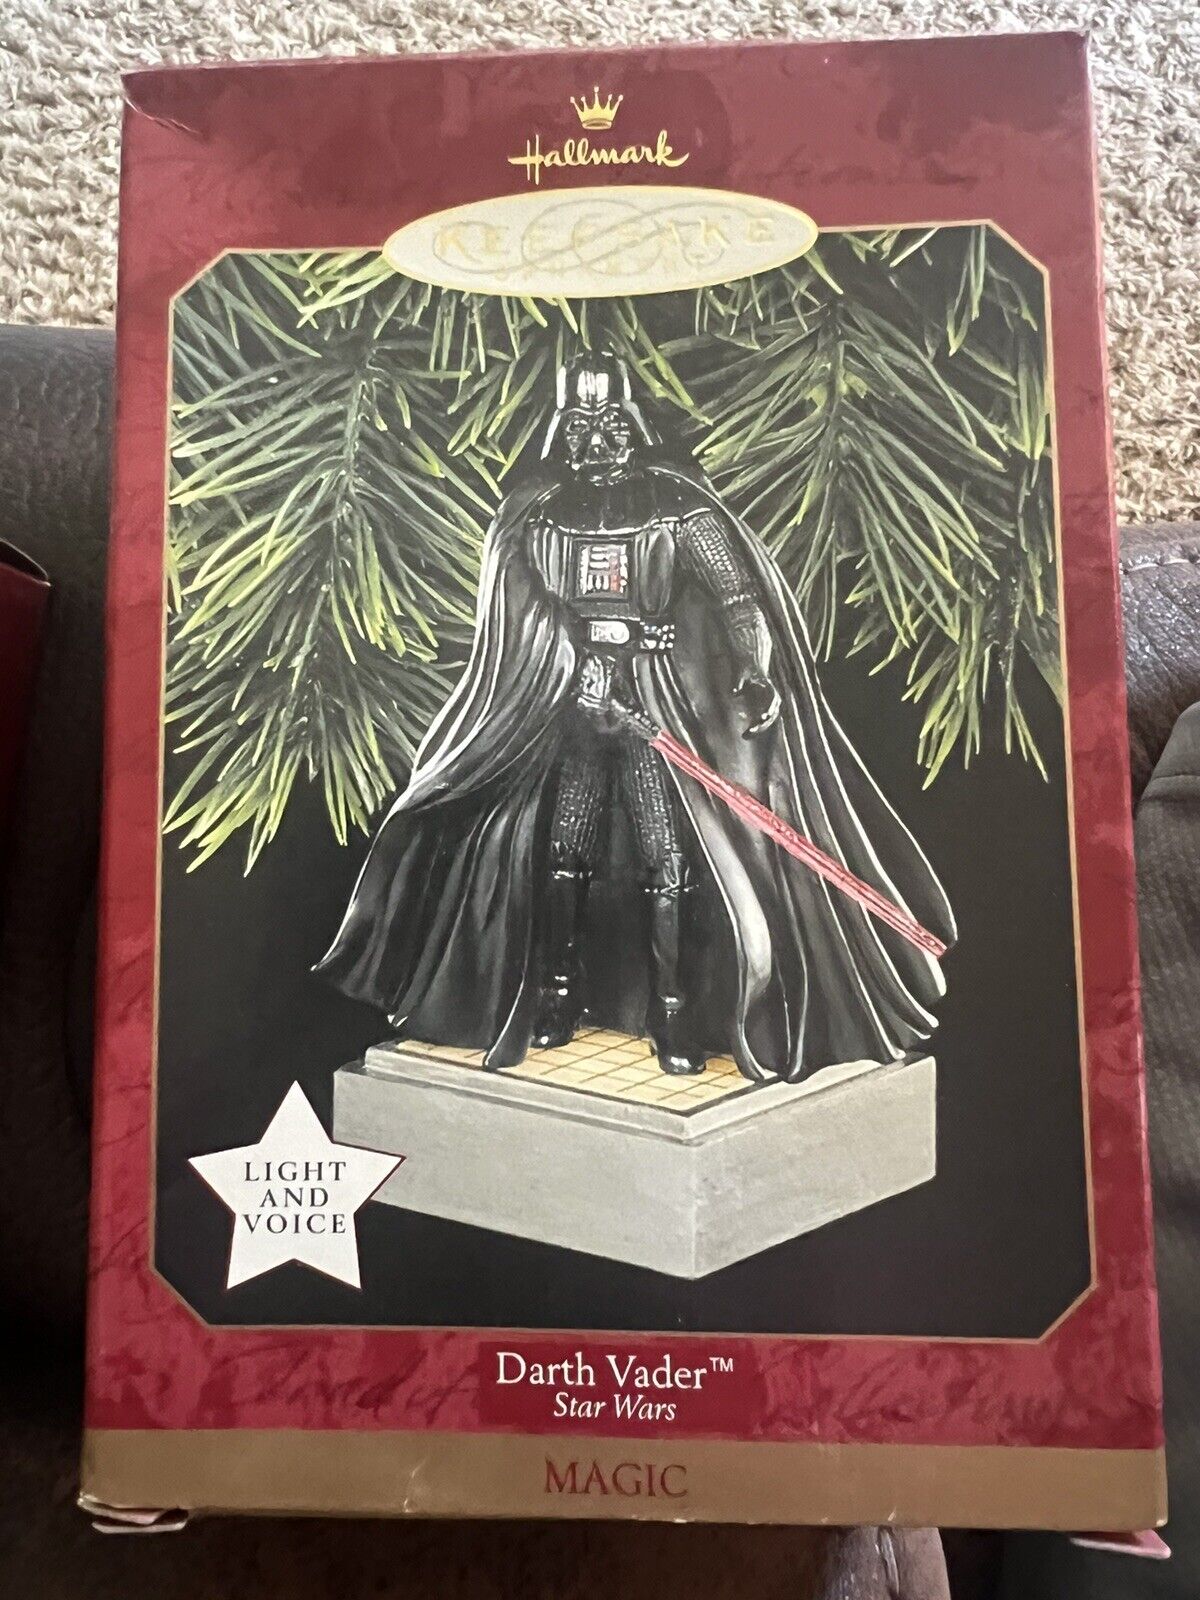 Hallmark Keepsake Ornament Darth Vader Light and Voice Star Wars Magic Ornament